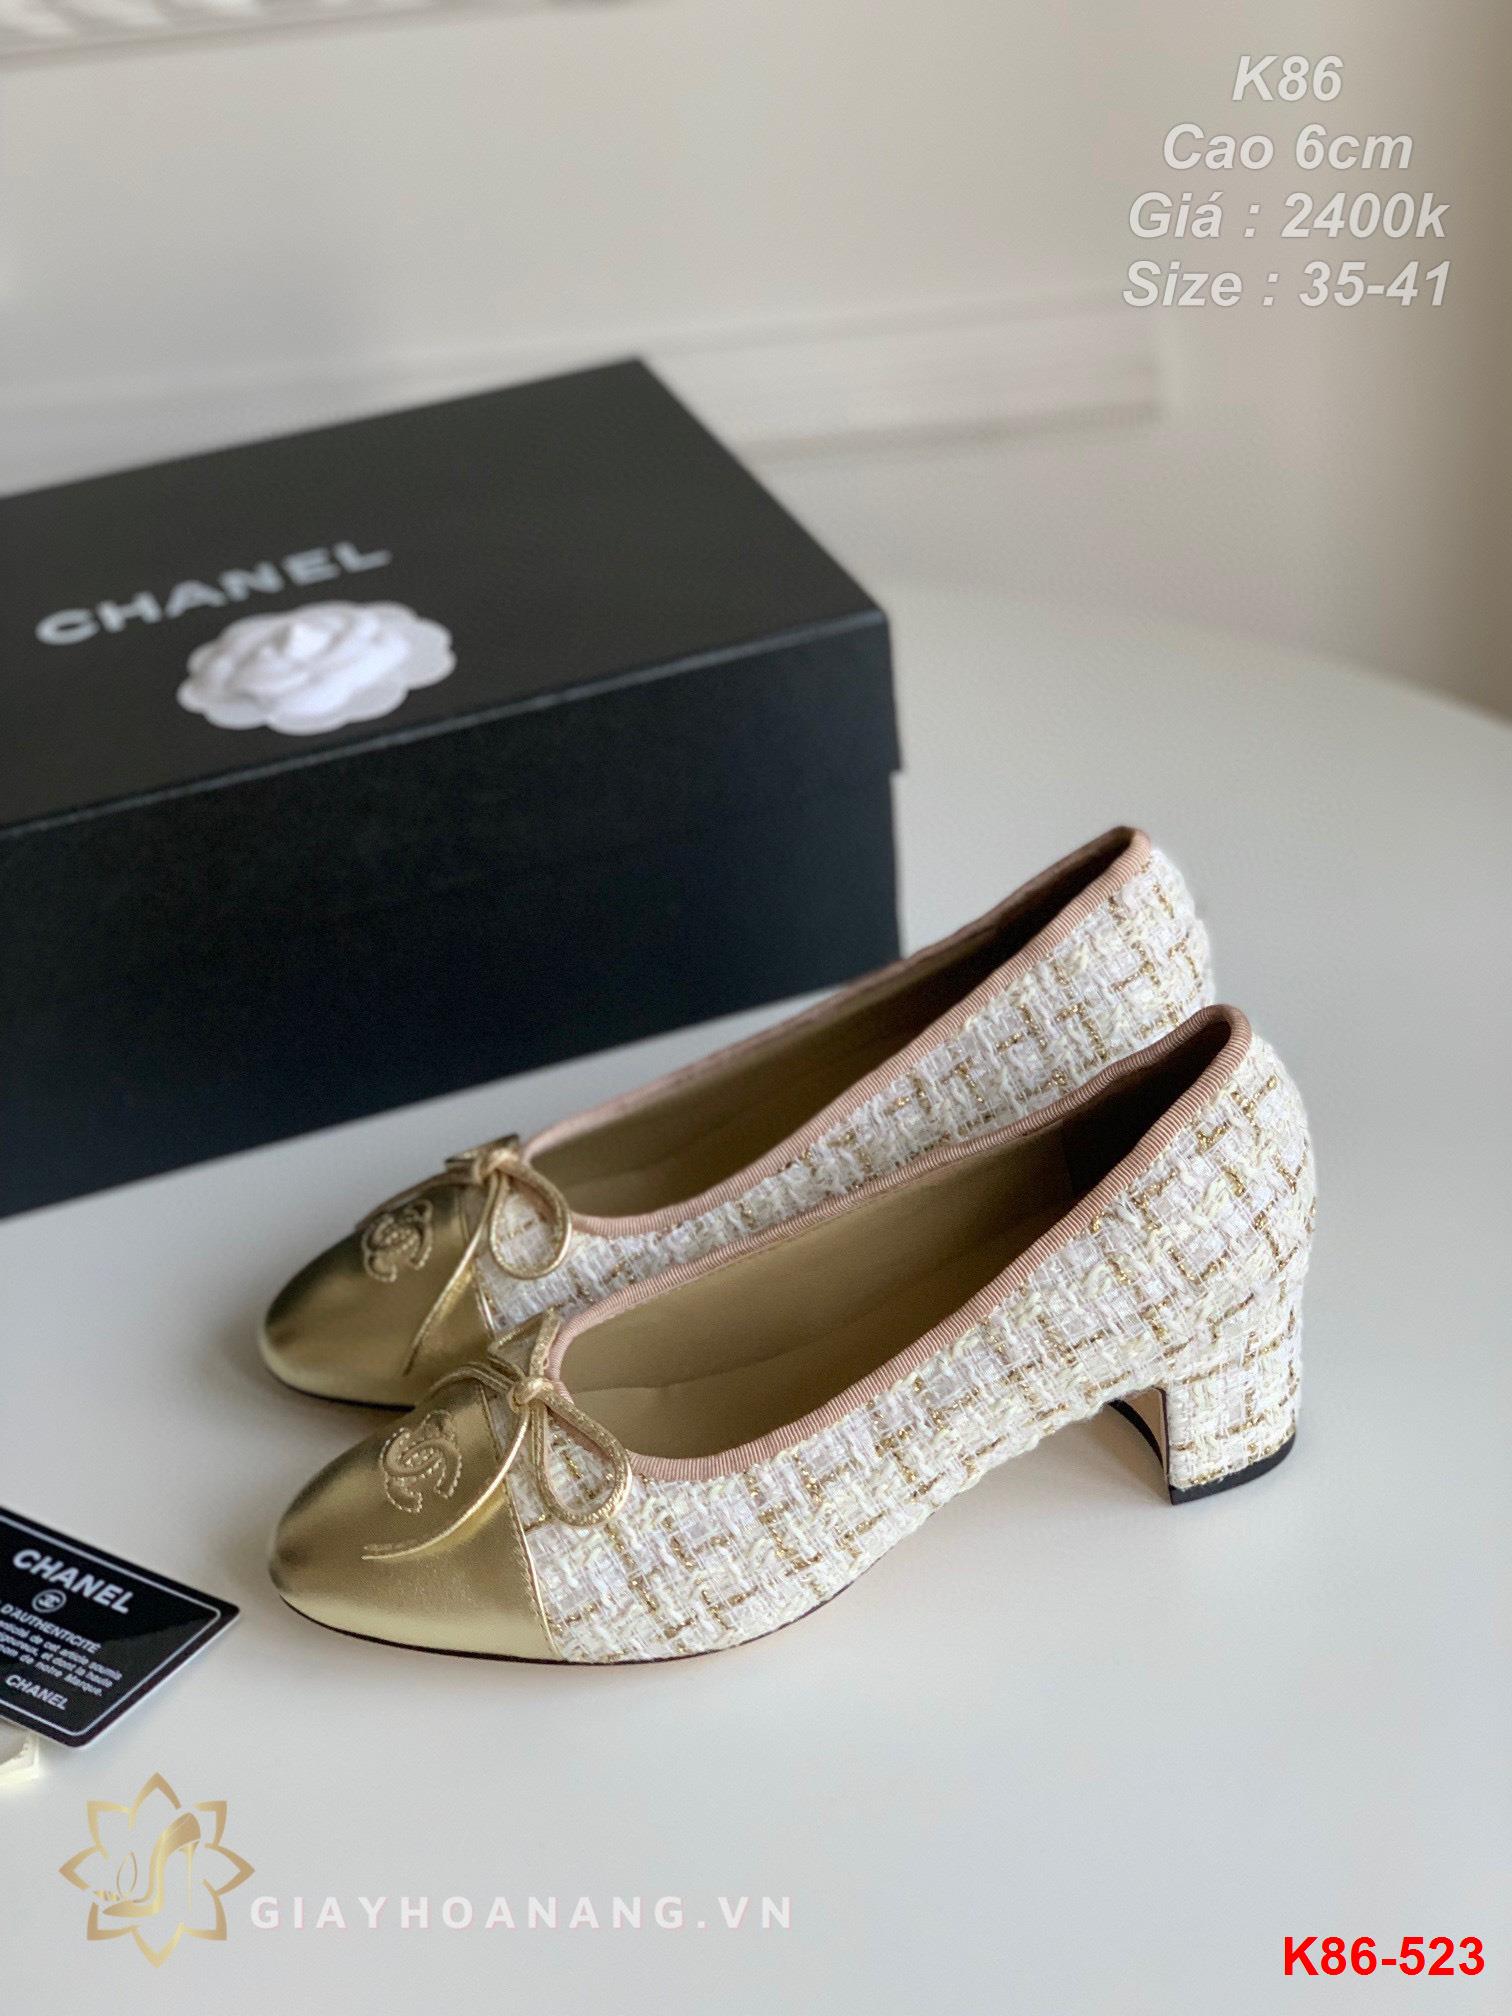 K86-523 Chanel giày cao 6cm siêu cấp